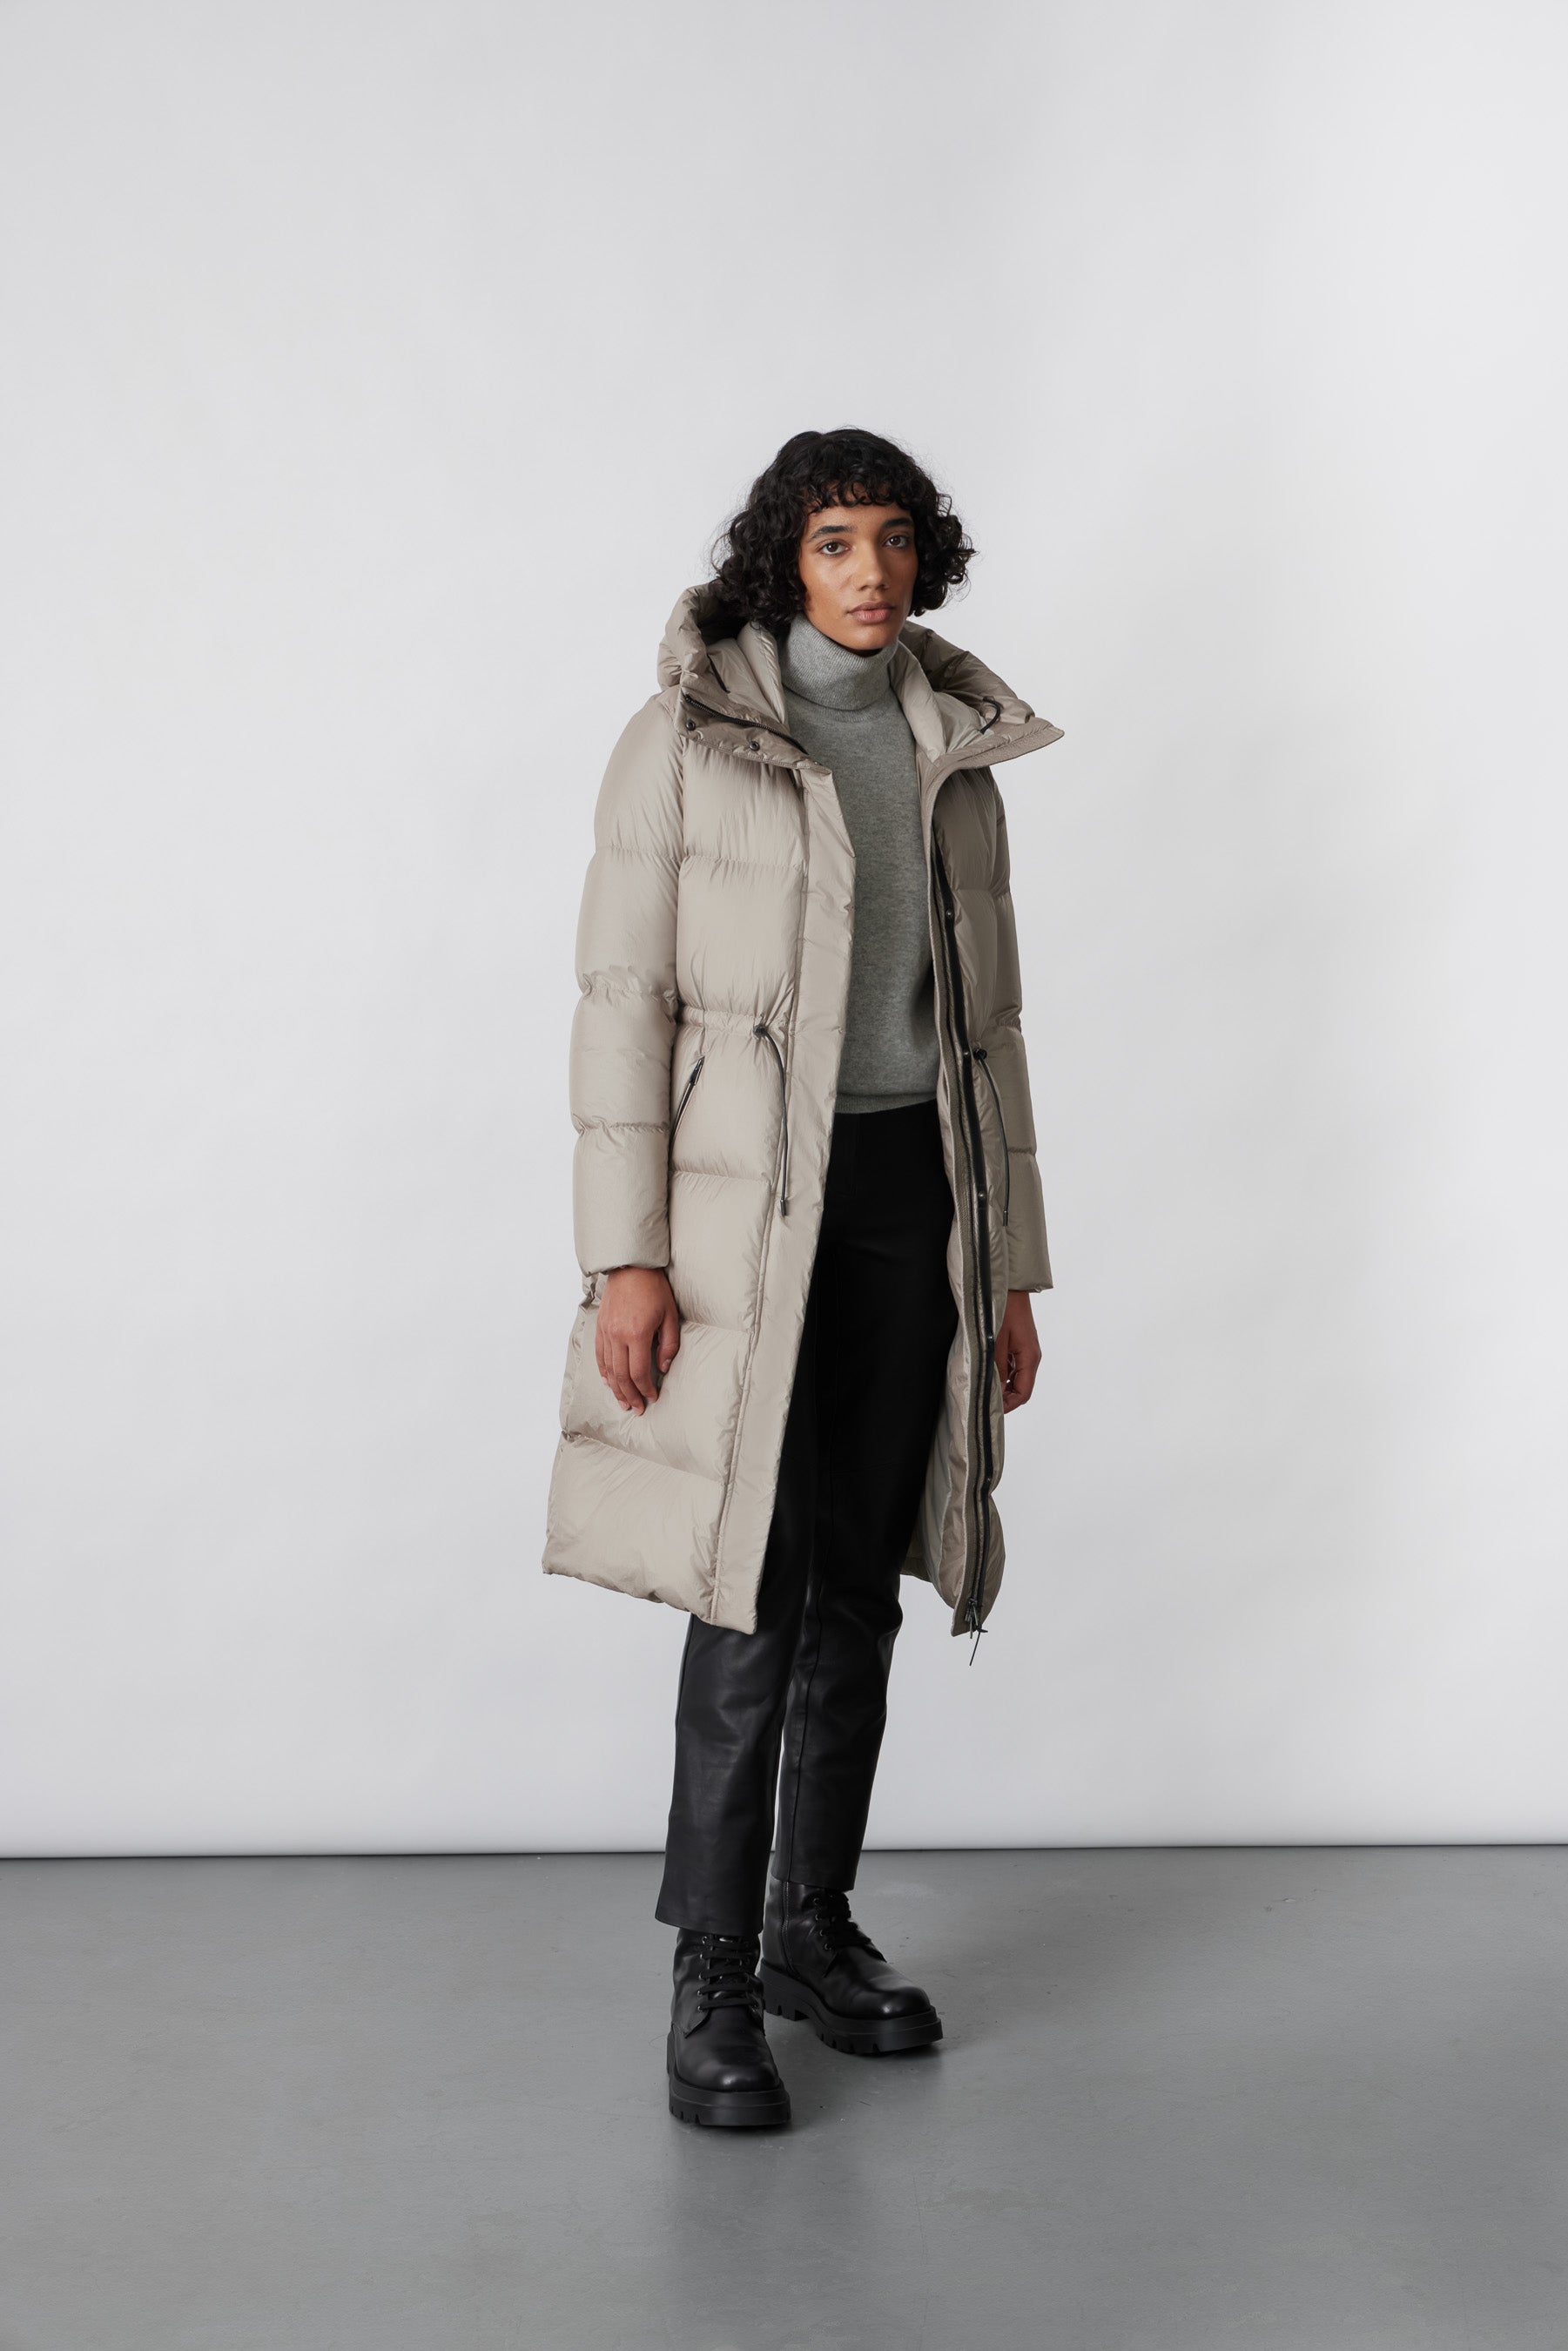 Ishani, Foil shield long down coat with hood for ladies | Mackage® US